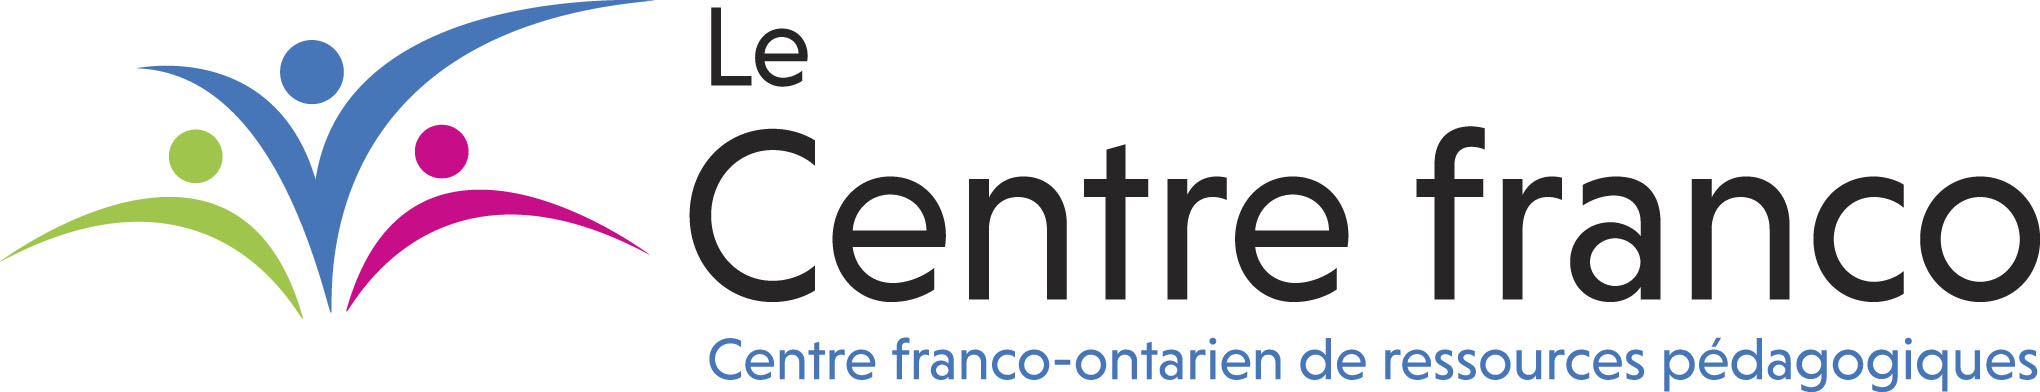 Logo Le Centre franco.